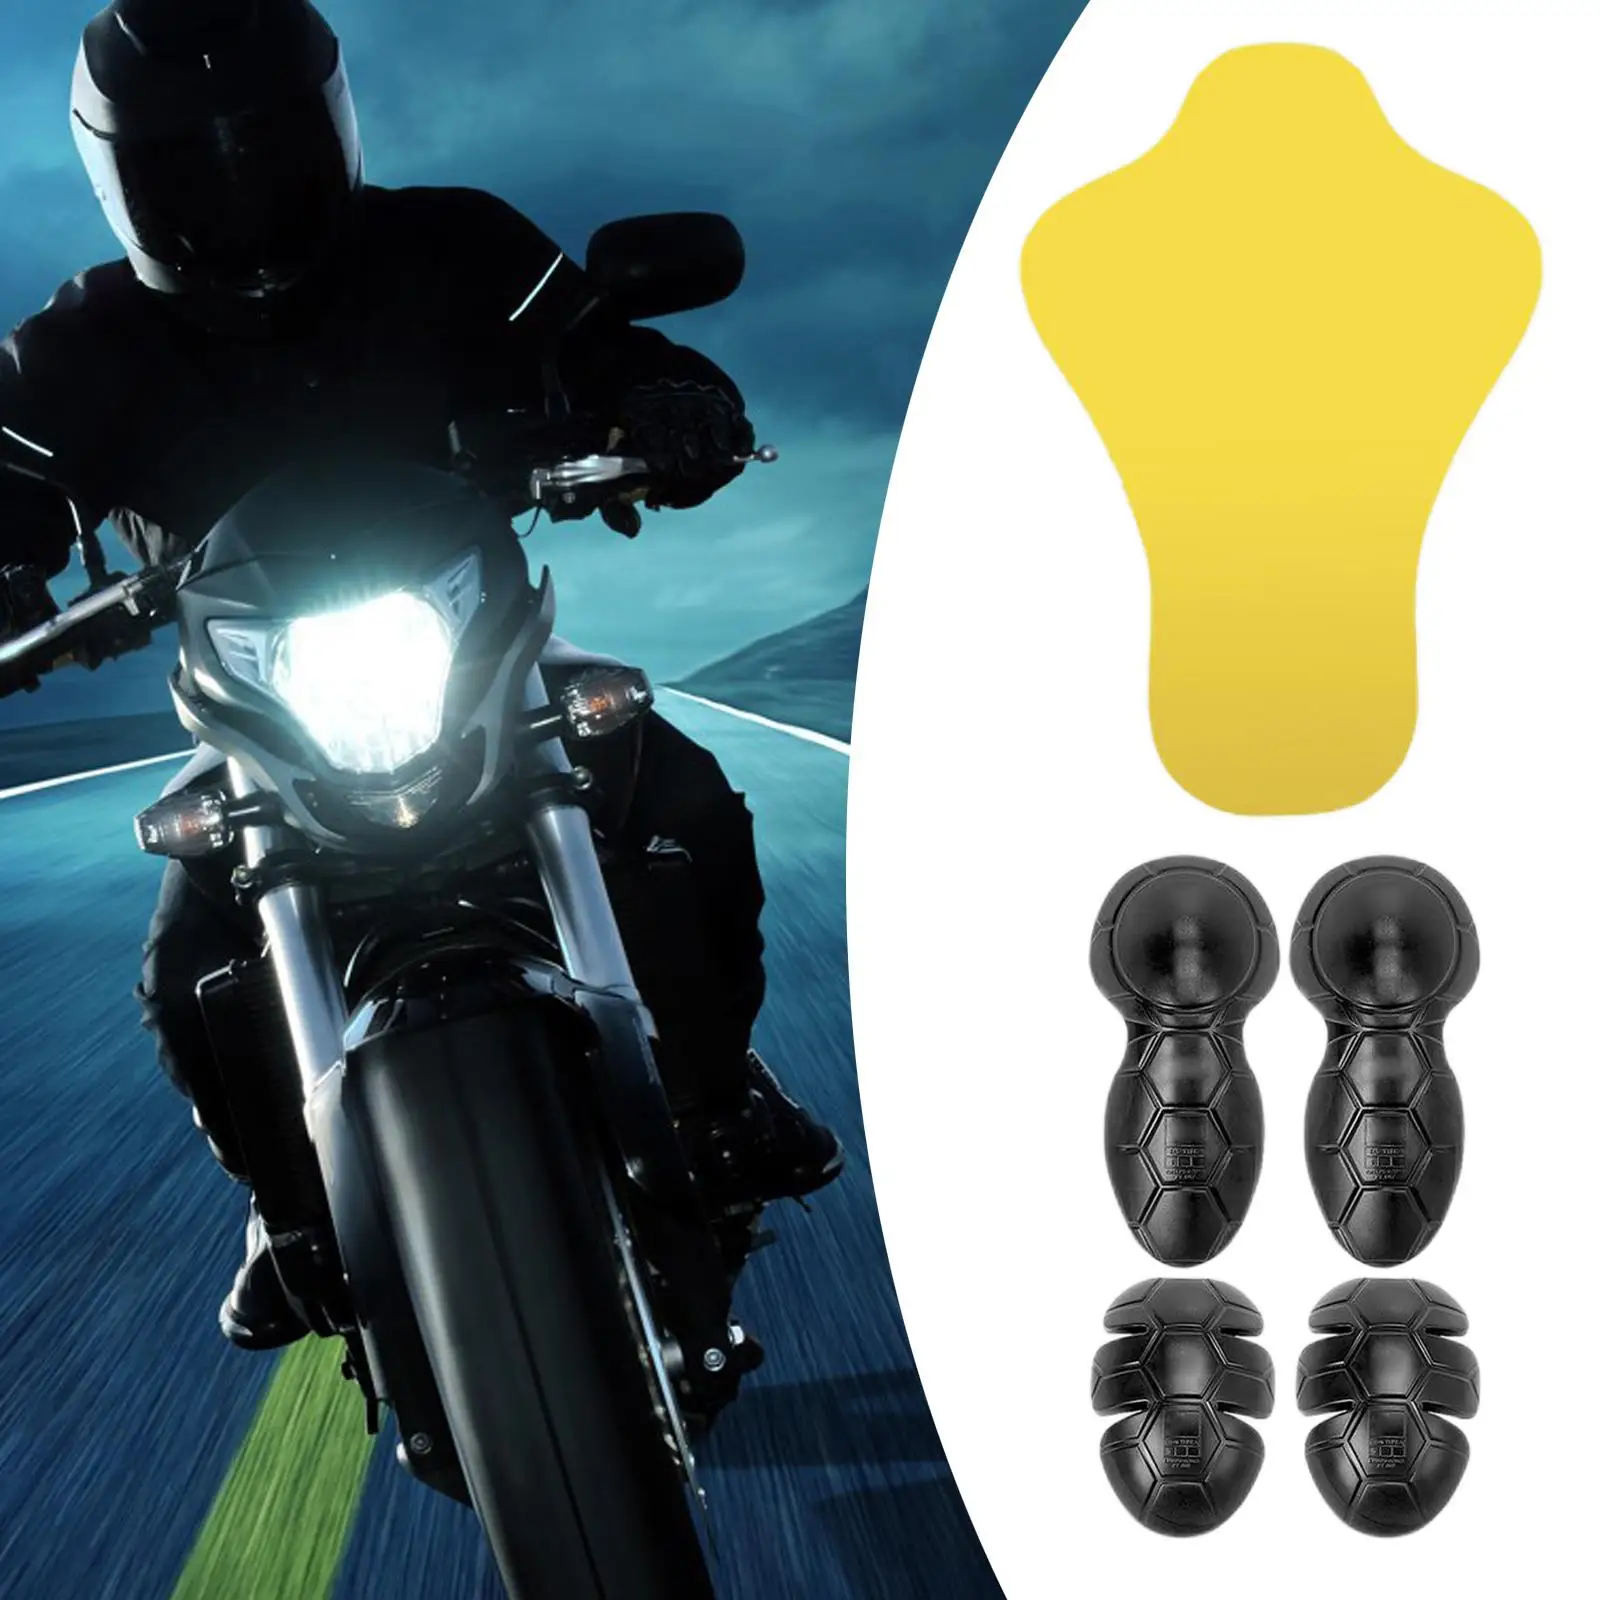 5Pcs Motorcycle Jacket Insert Armor Protectors Set Removable Motorcycle Biker Equipment